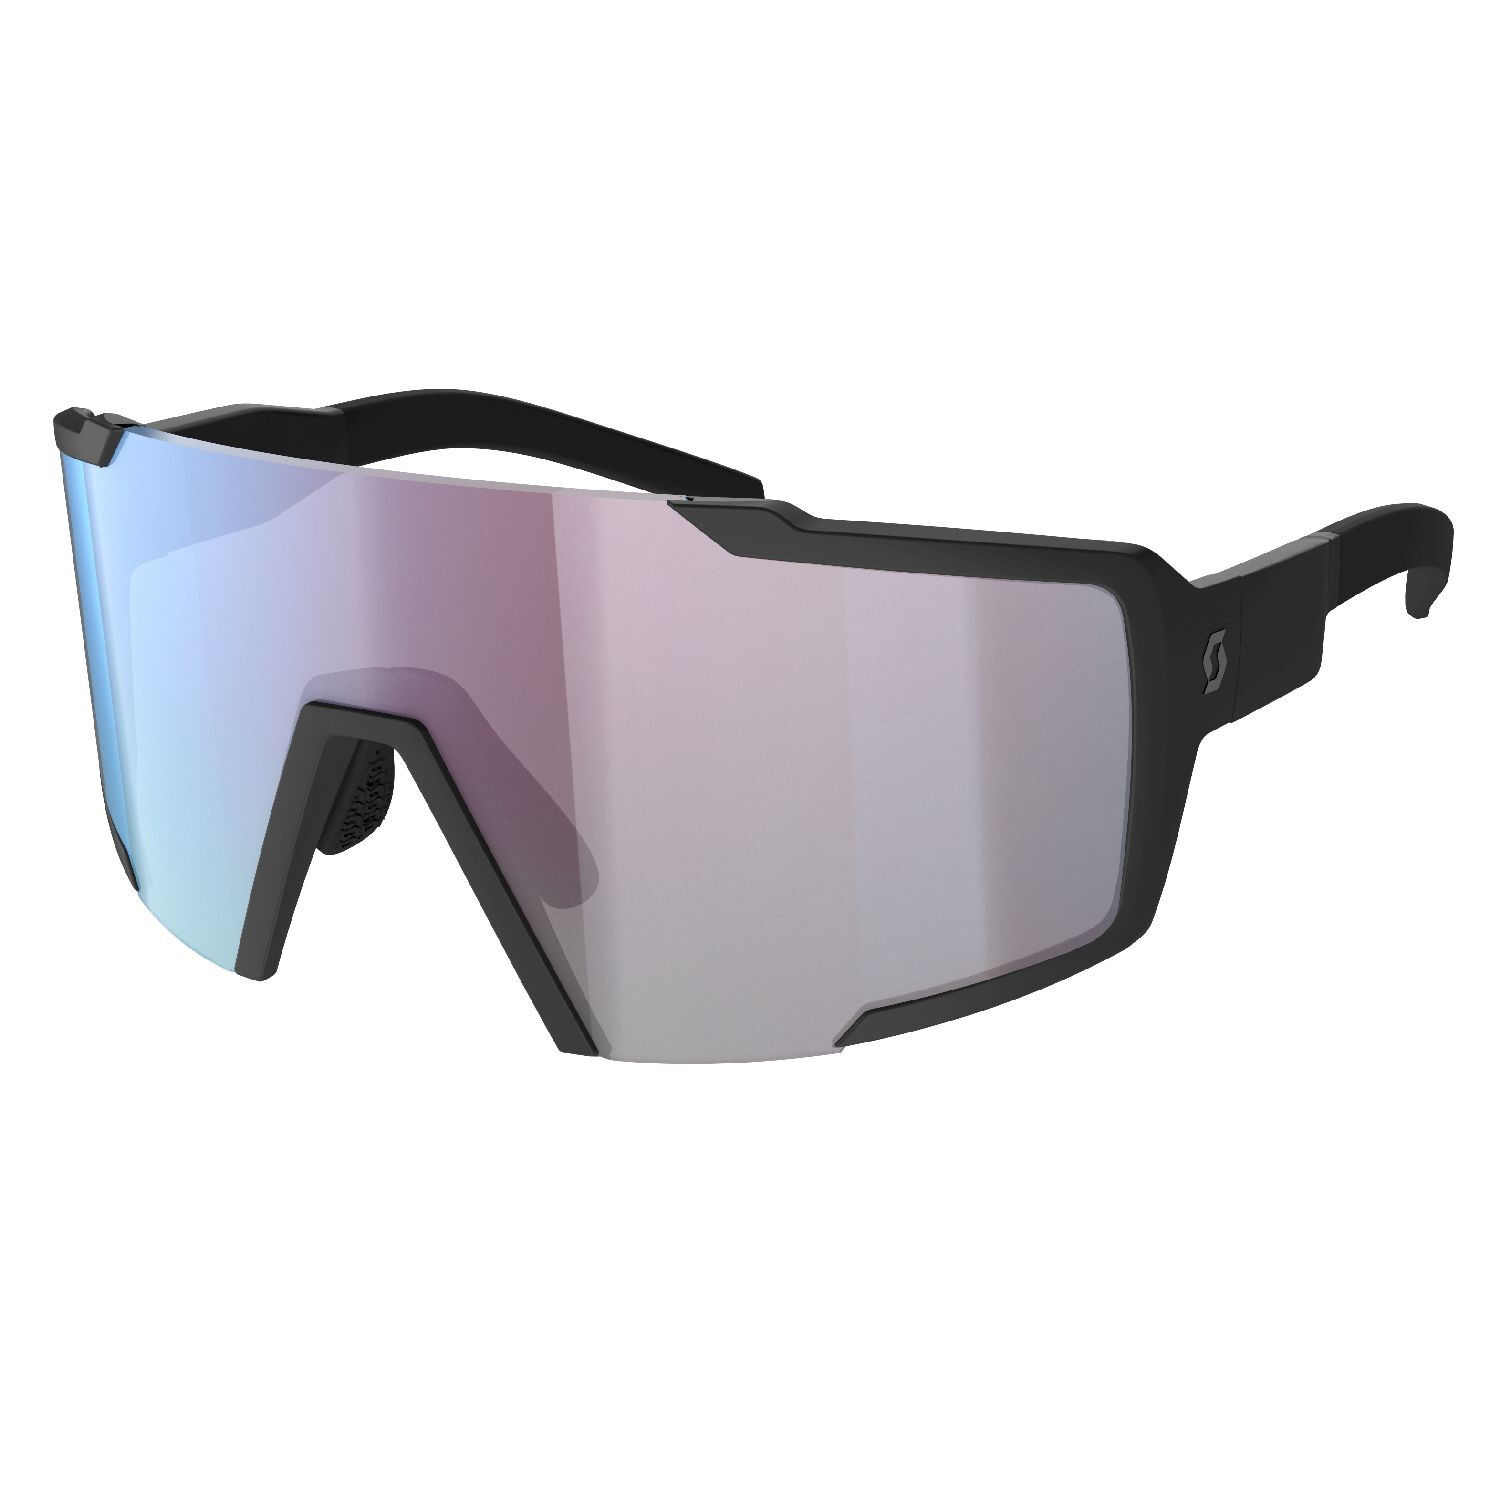 Scott Shield Compact - Sunglasses